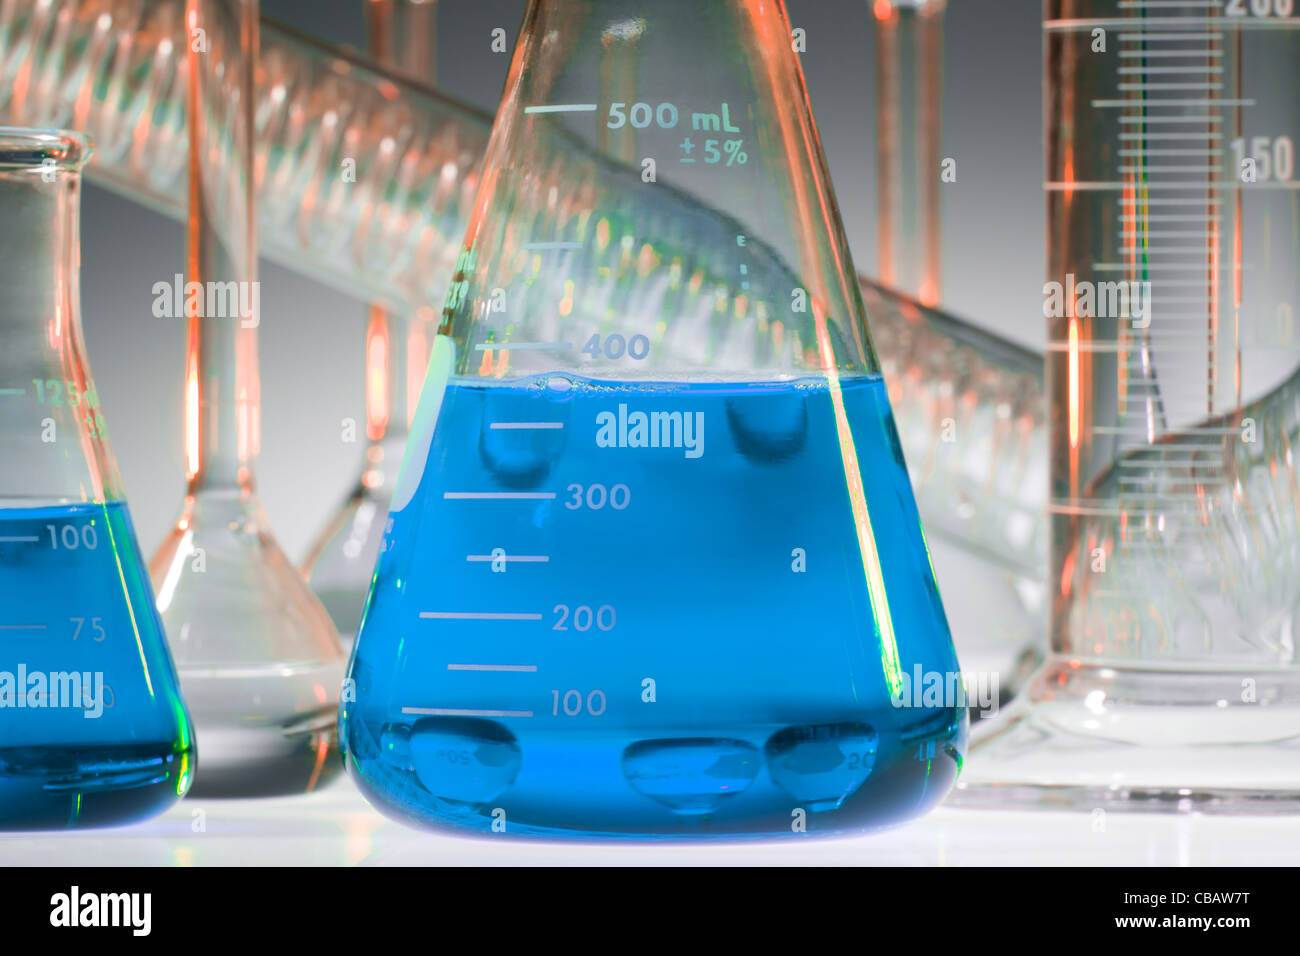 Chemischen Glaswaren Stockfoto